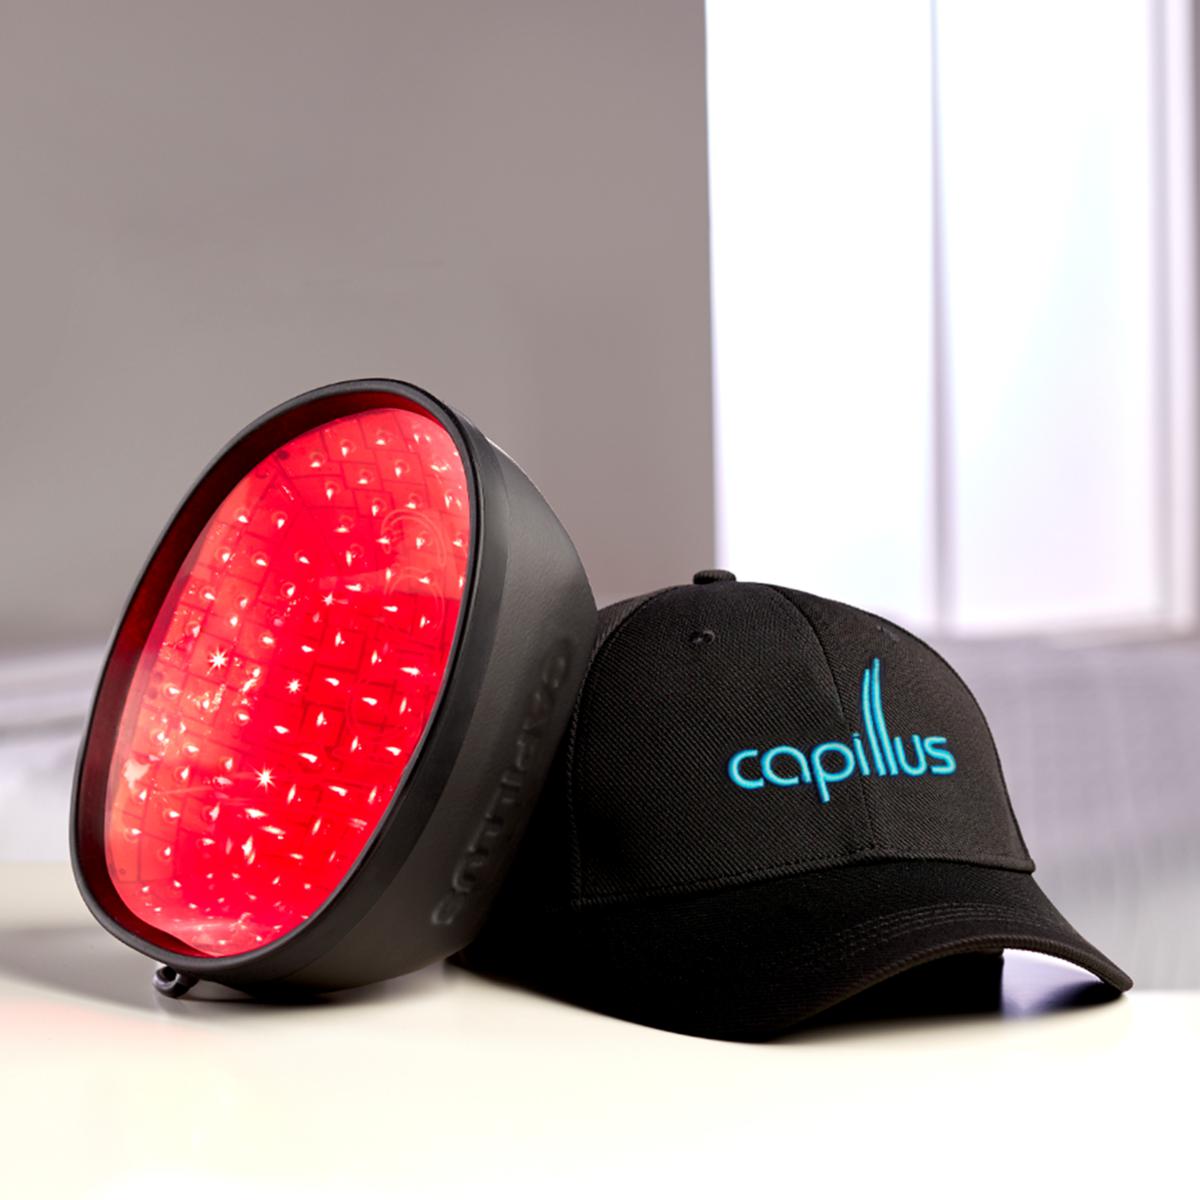 Capillus’ Laser Caps for Hair Growth